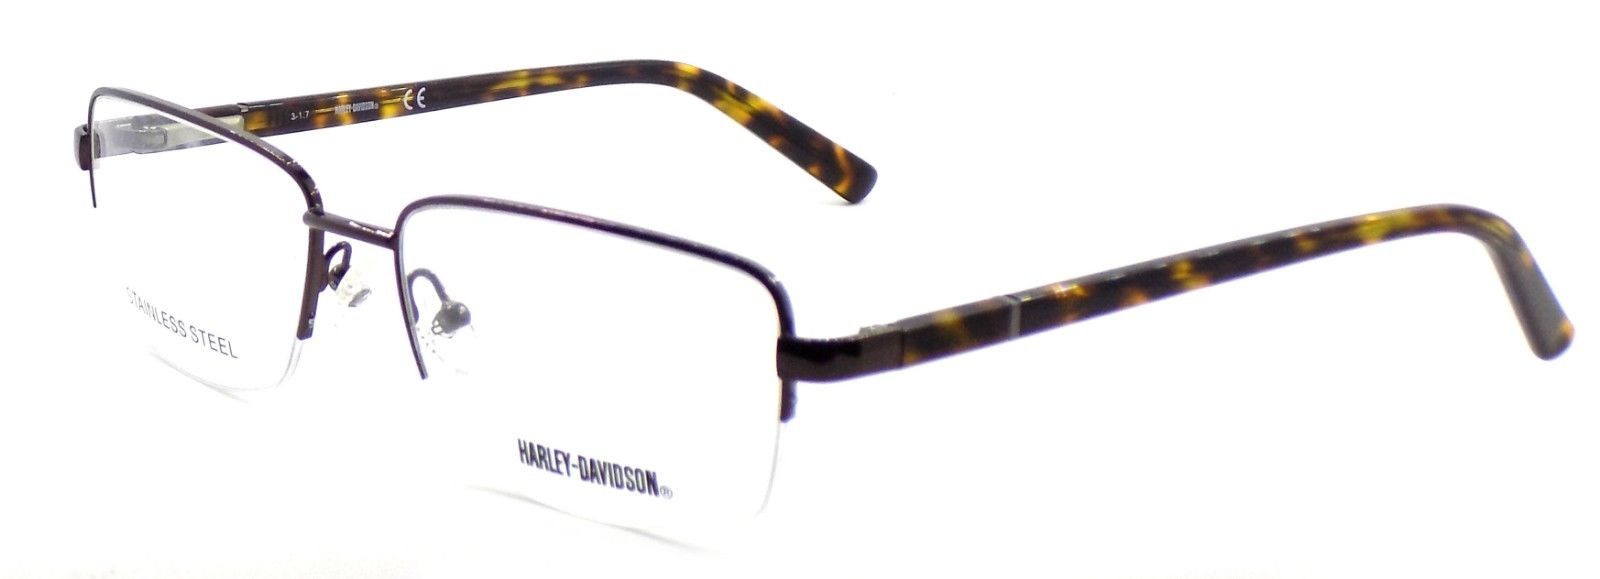 1-Harley Davidson HD0734 048 Men's Half-Rim Eyeglasses Frames 56-17-145 Brown-664689799558-IKSpecs